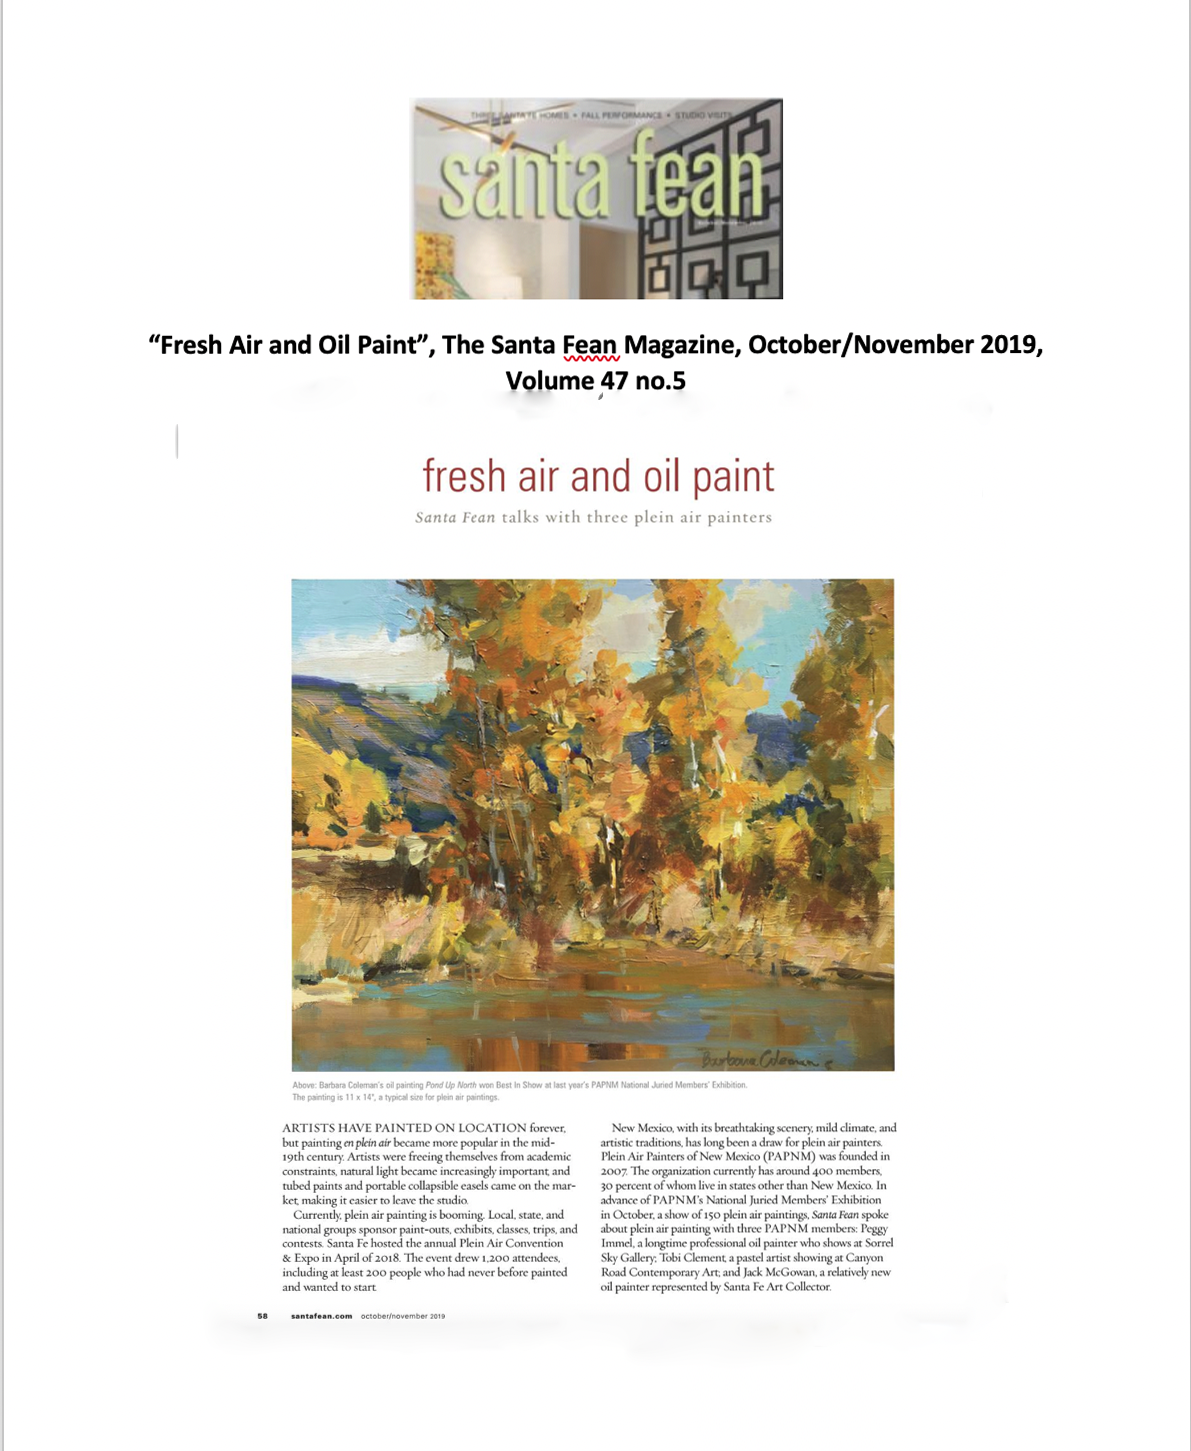 The Santa Fean Magazine, October/November 2019